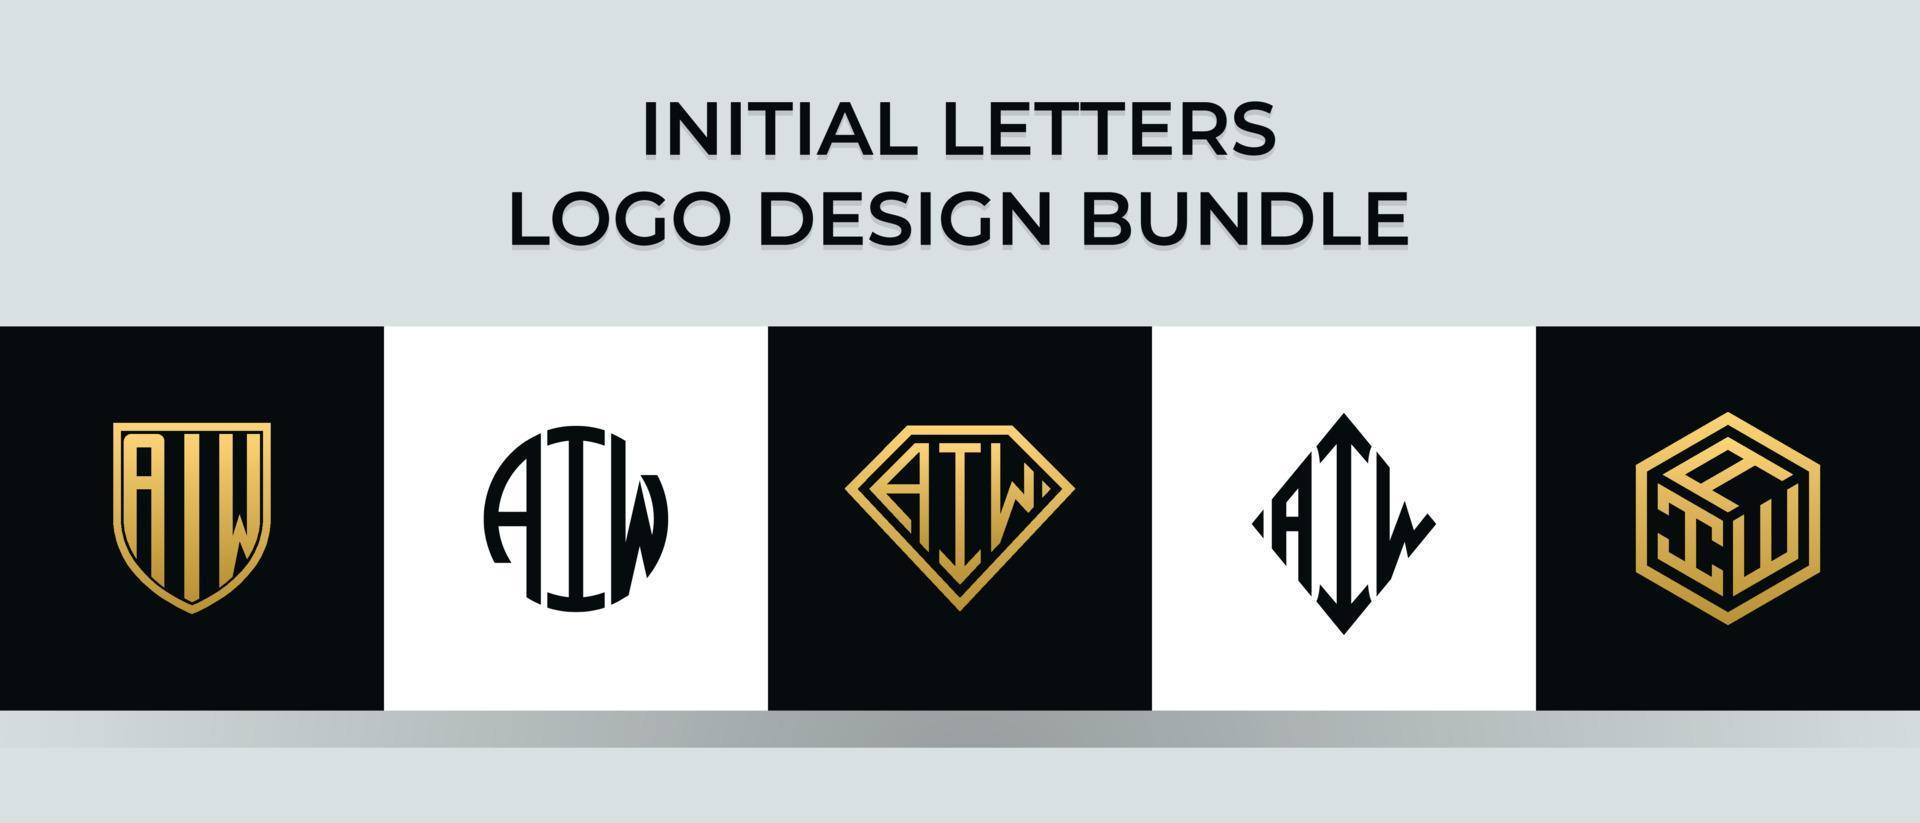 lettere iniziali aiw logo design bundle vettore